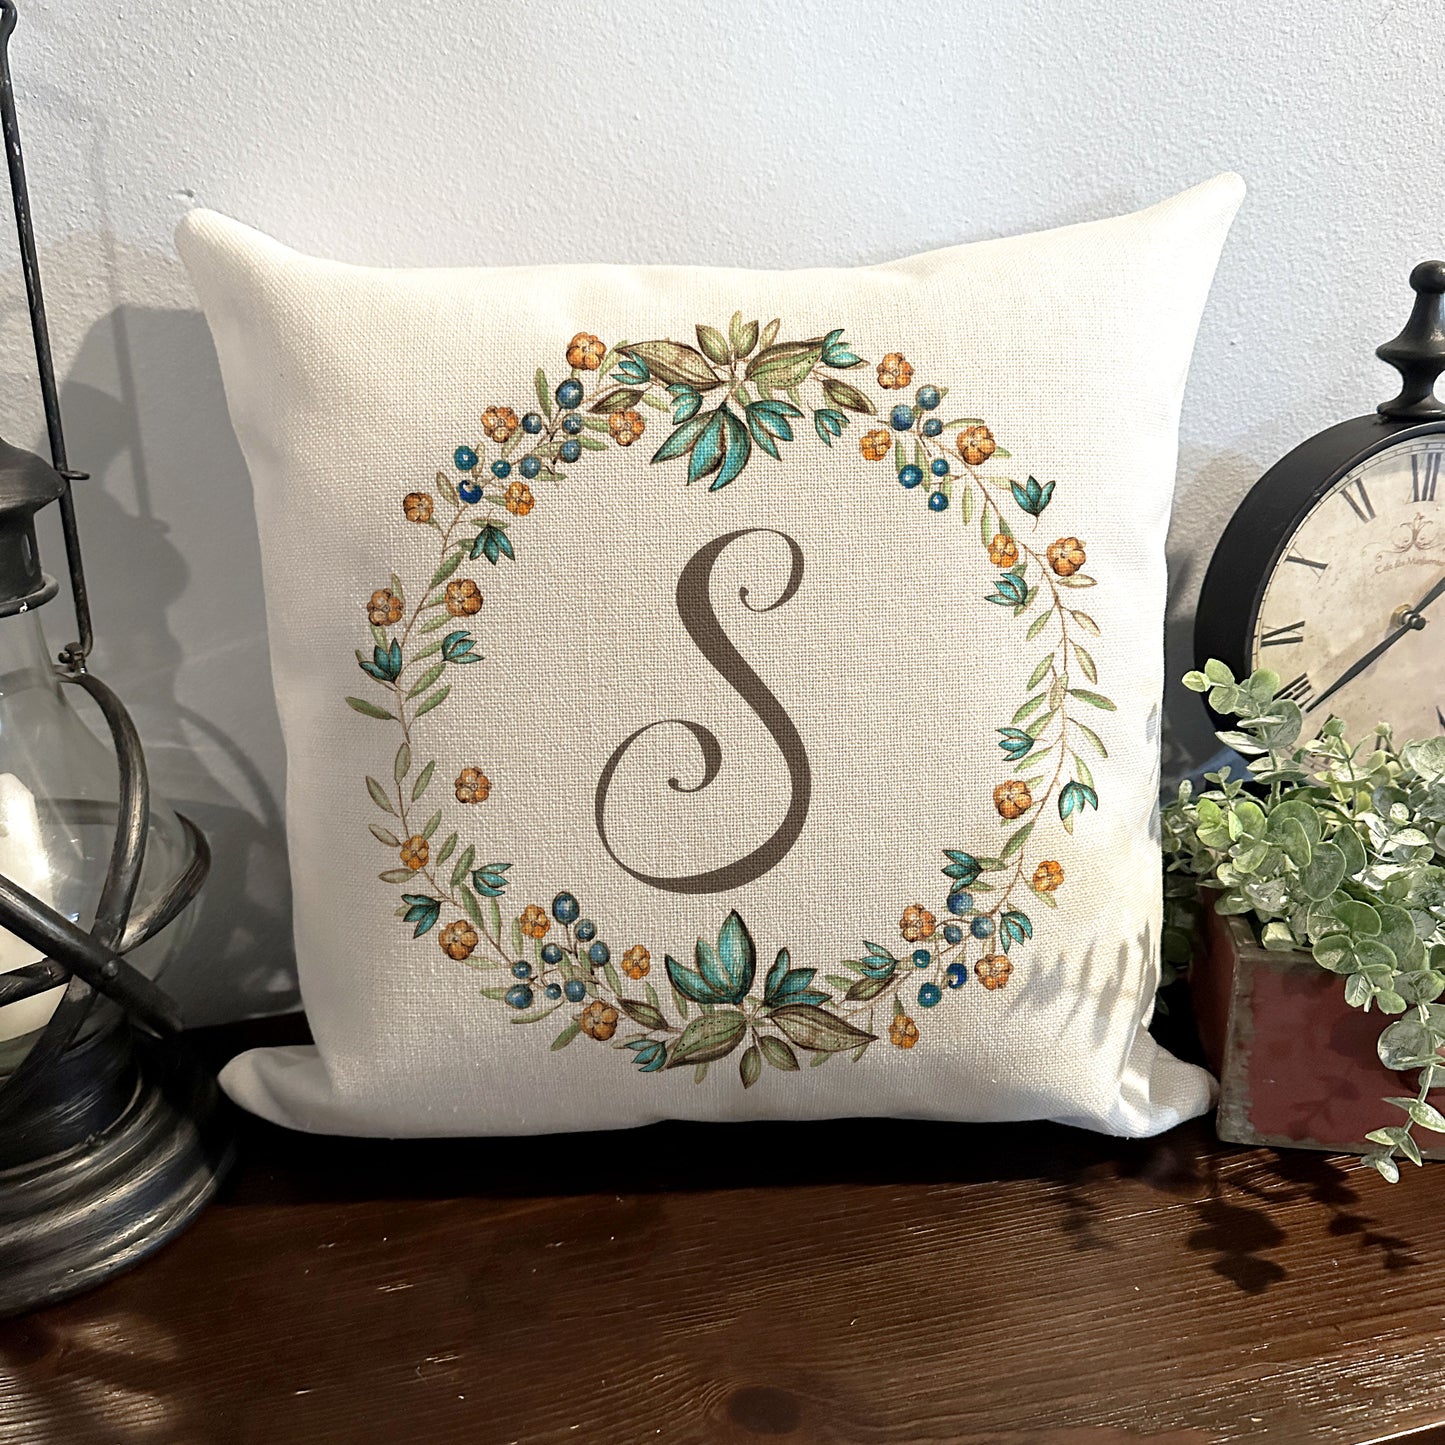 Personalized Rustic Wreath Monogram Throw Pillow